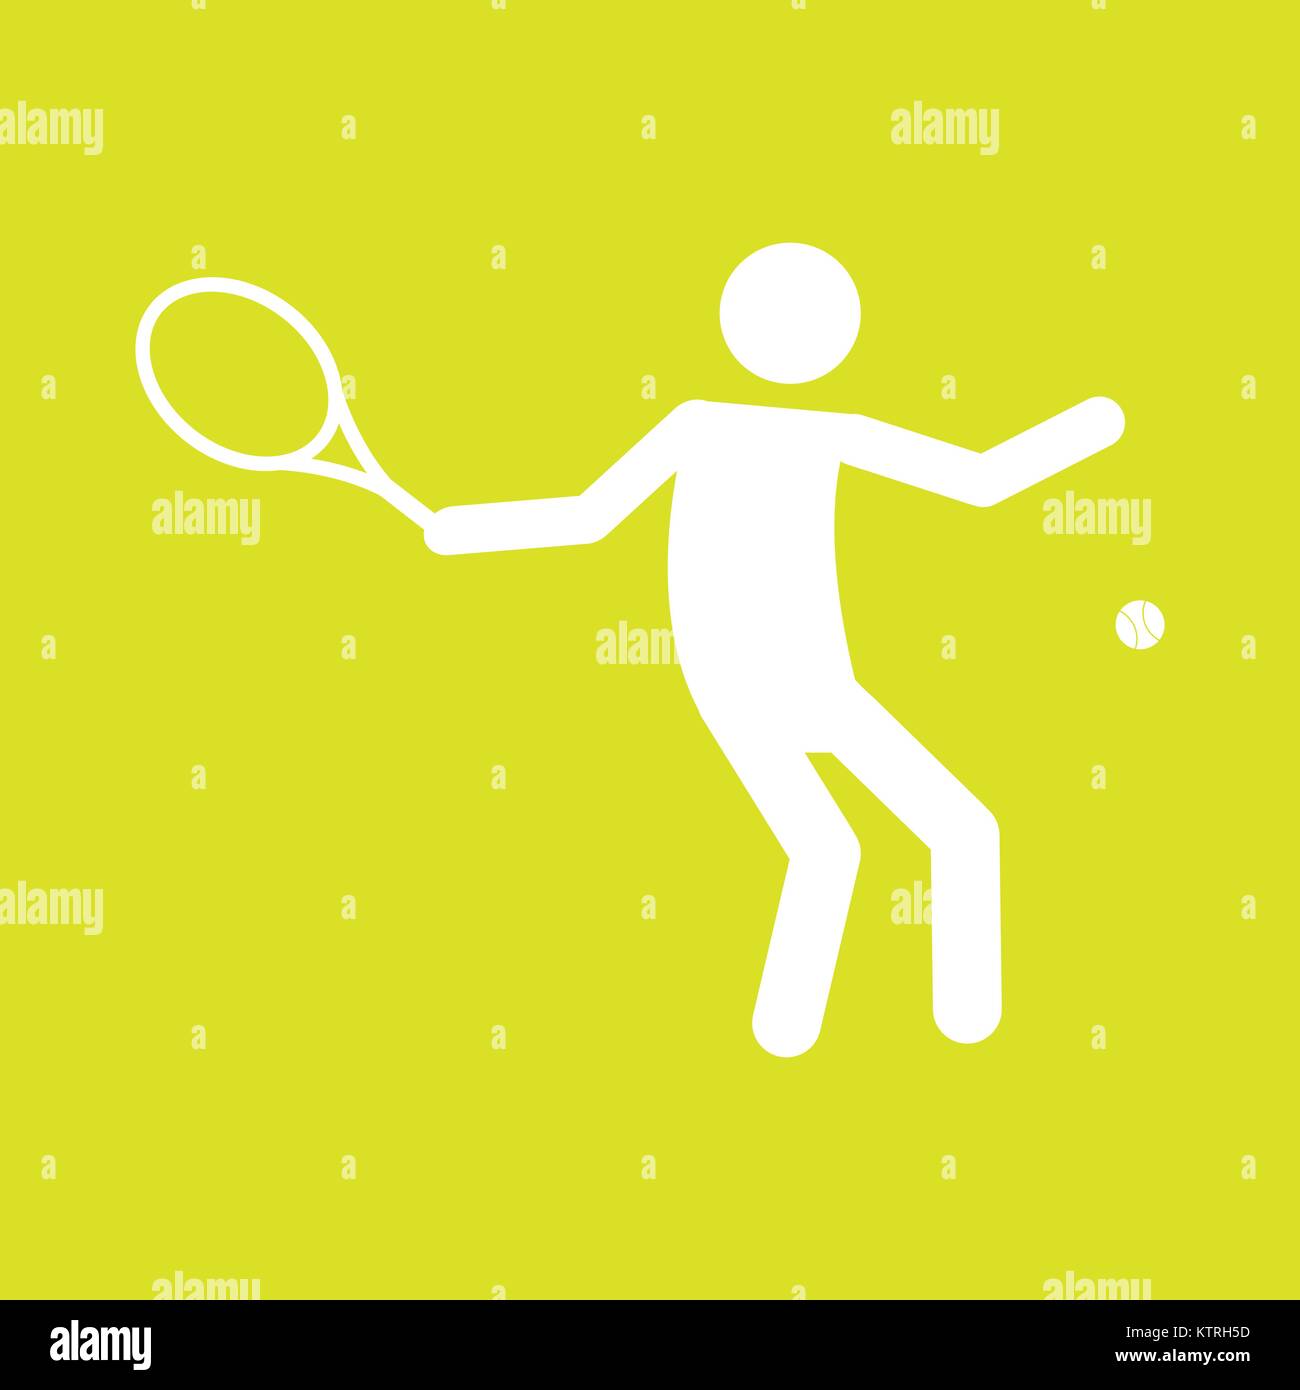 Tennis Sport Figure Symbol Vector Illustration Graphic Design Stock Vector